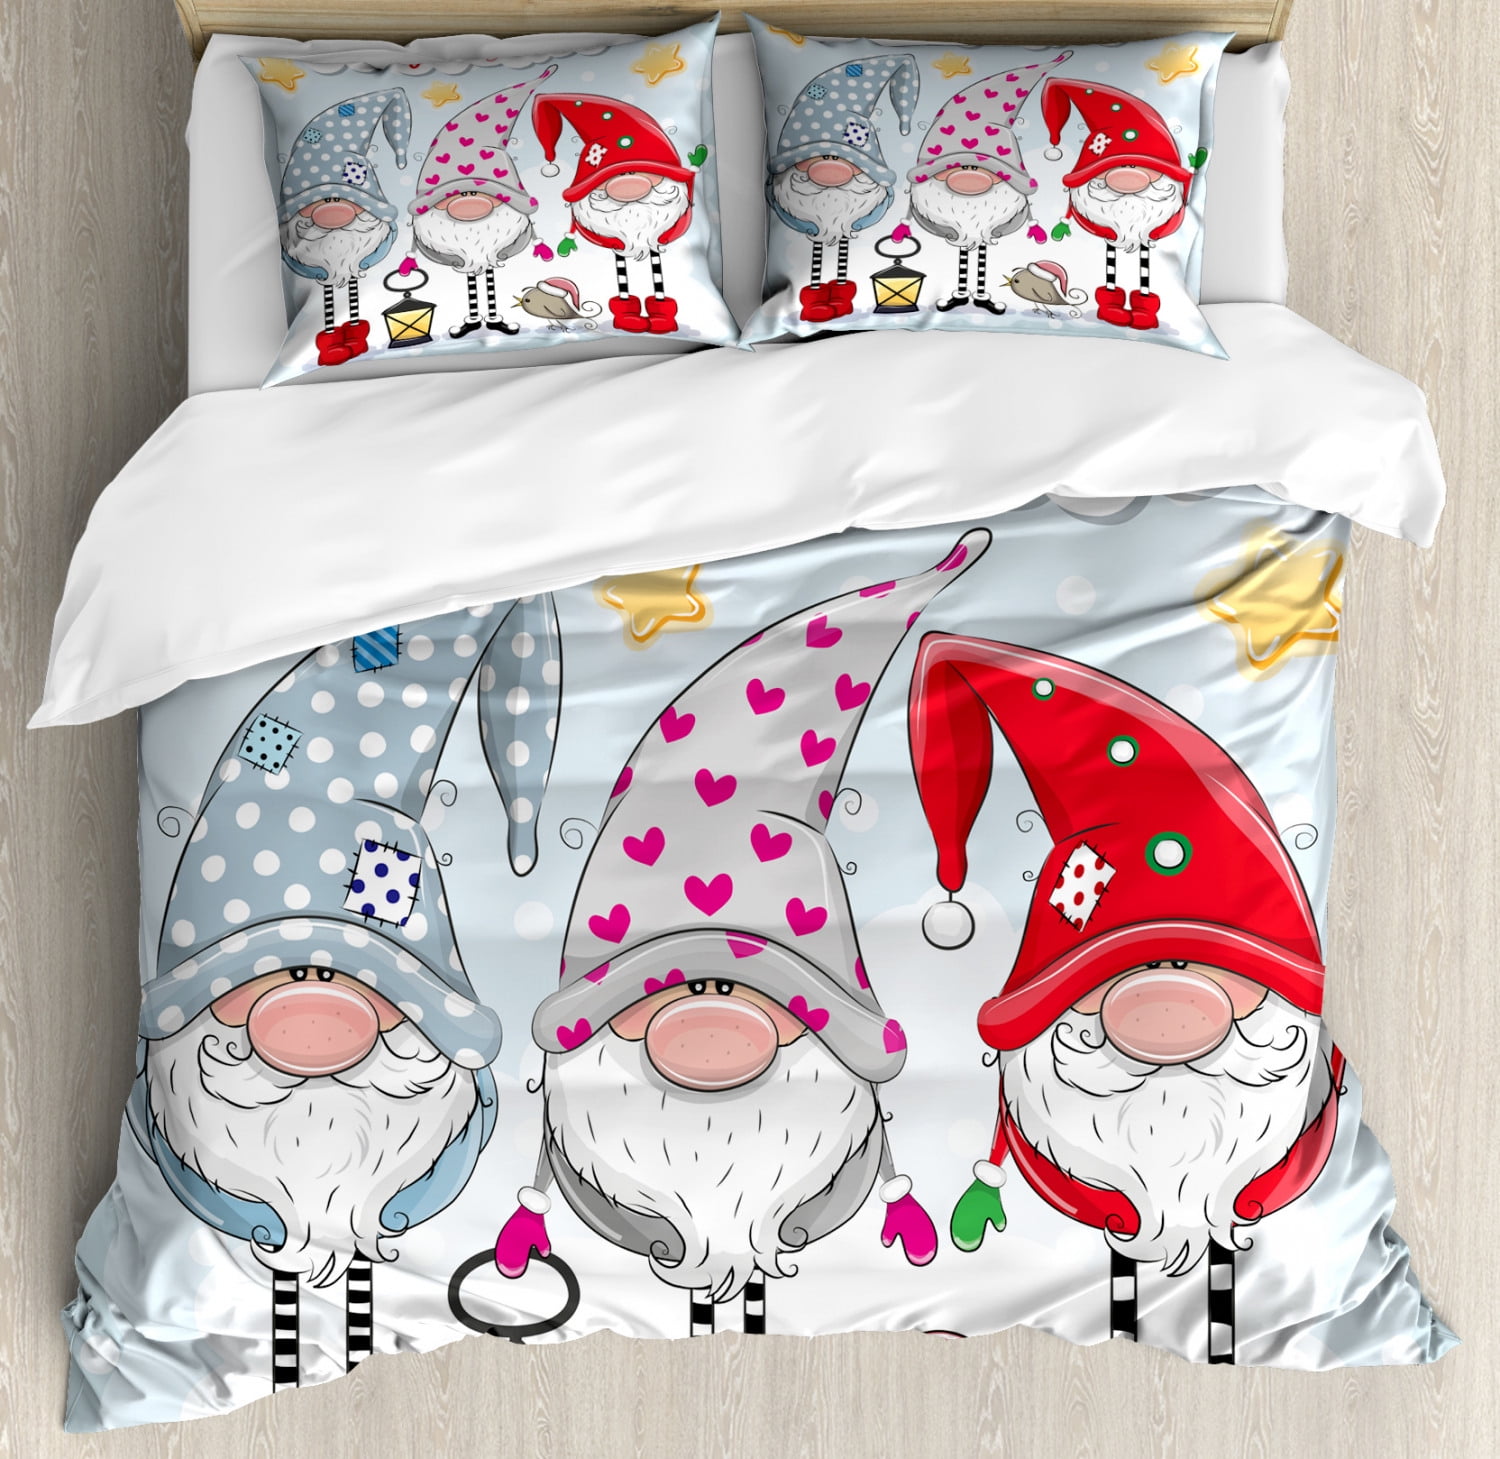 Christmas Duvet Cover Set, Cartoon Gnomes with Funny Noses